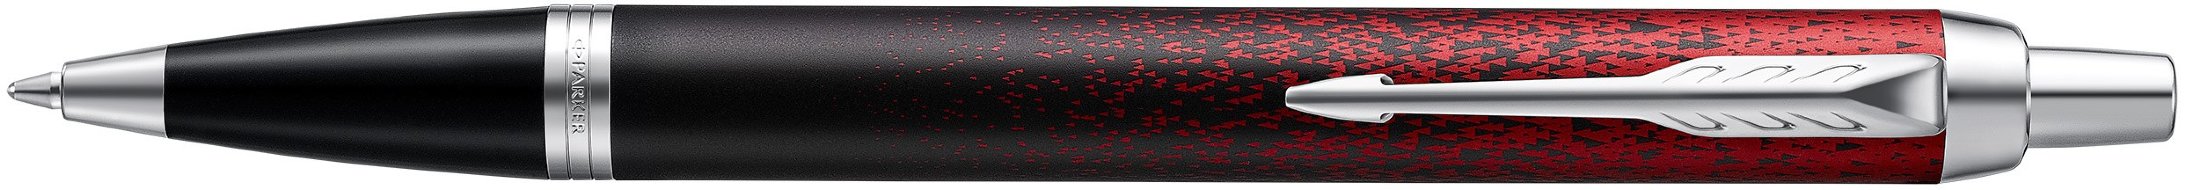 Ручка шариковая Parker IM Core SE K320 Red Ignite, подарочная коробка